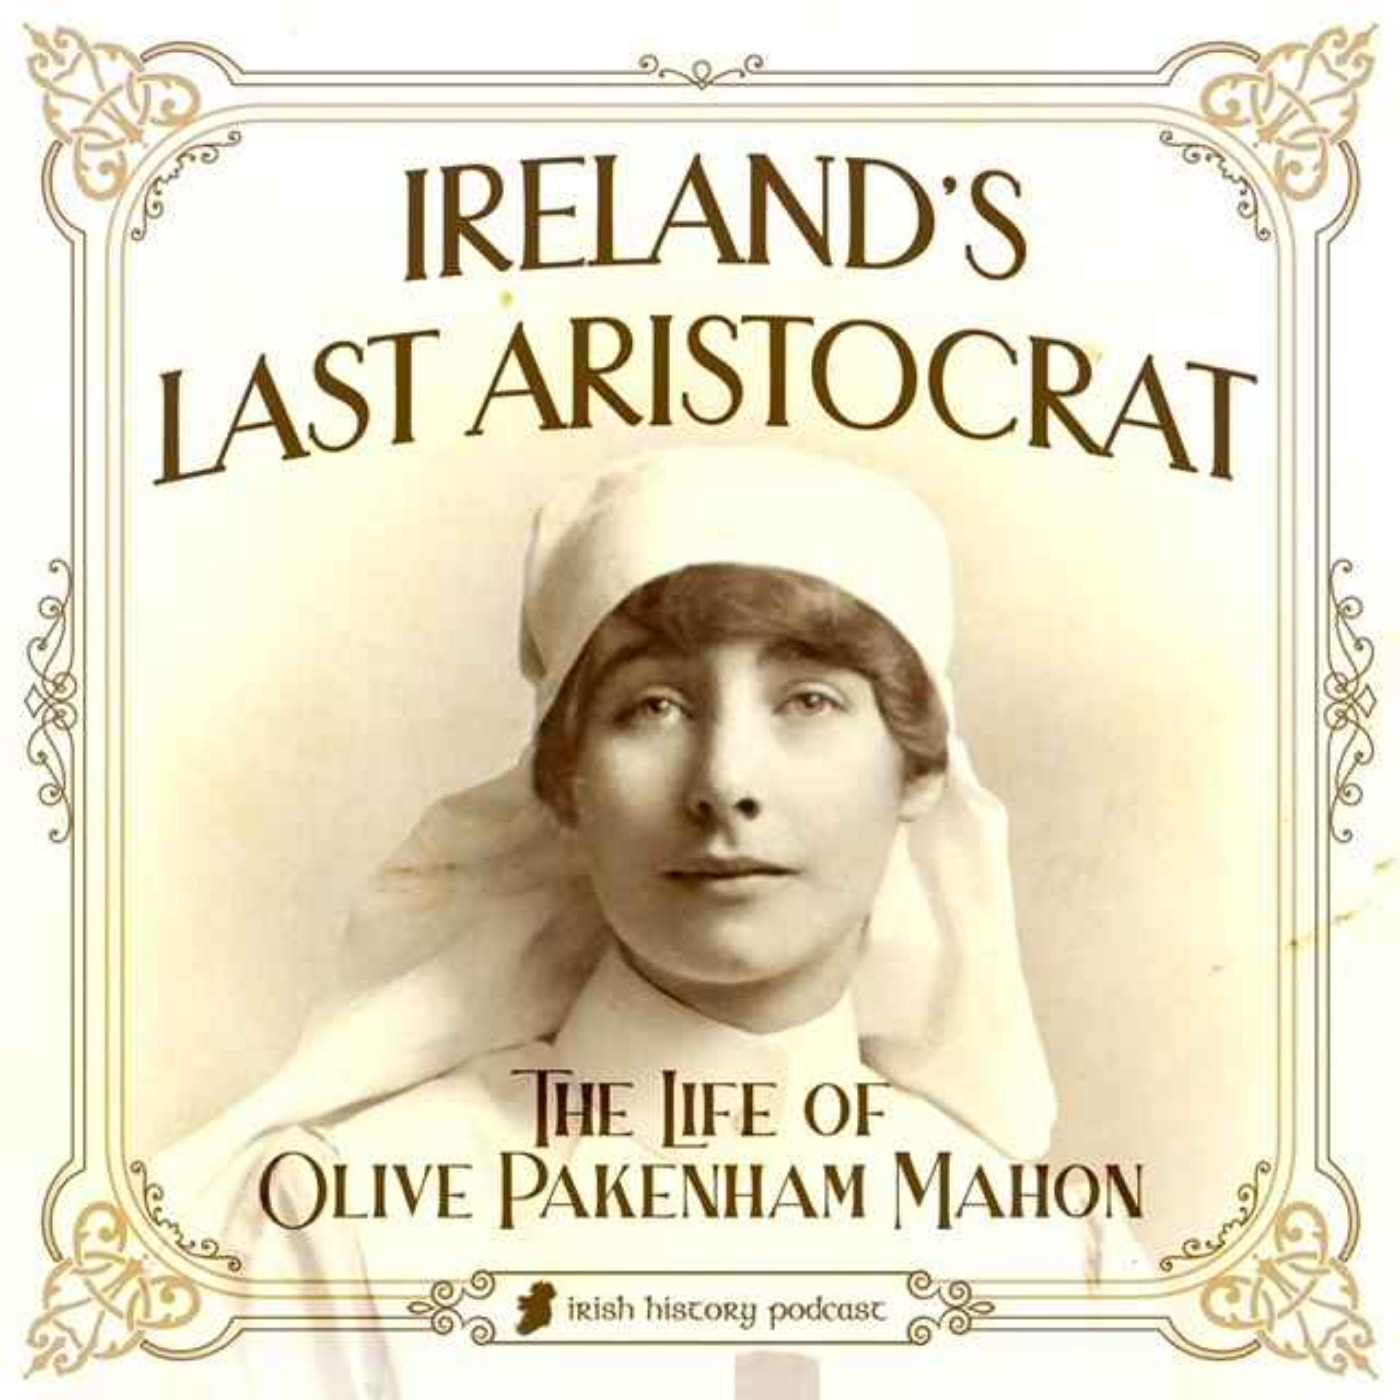 [Coming Weds 21st] Ireland's Last Aristocrat - the Life of Olive Pakenham Mahon